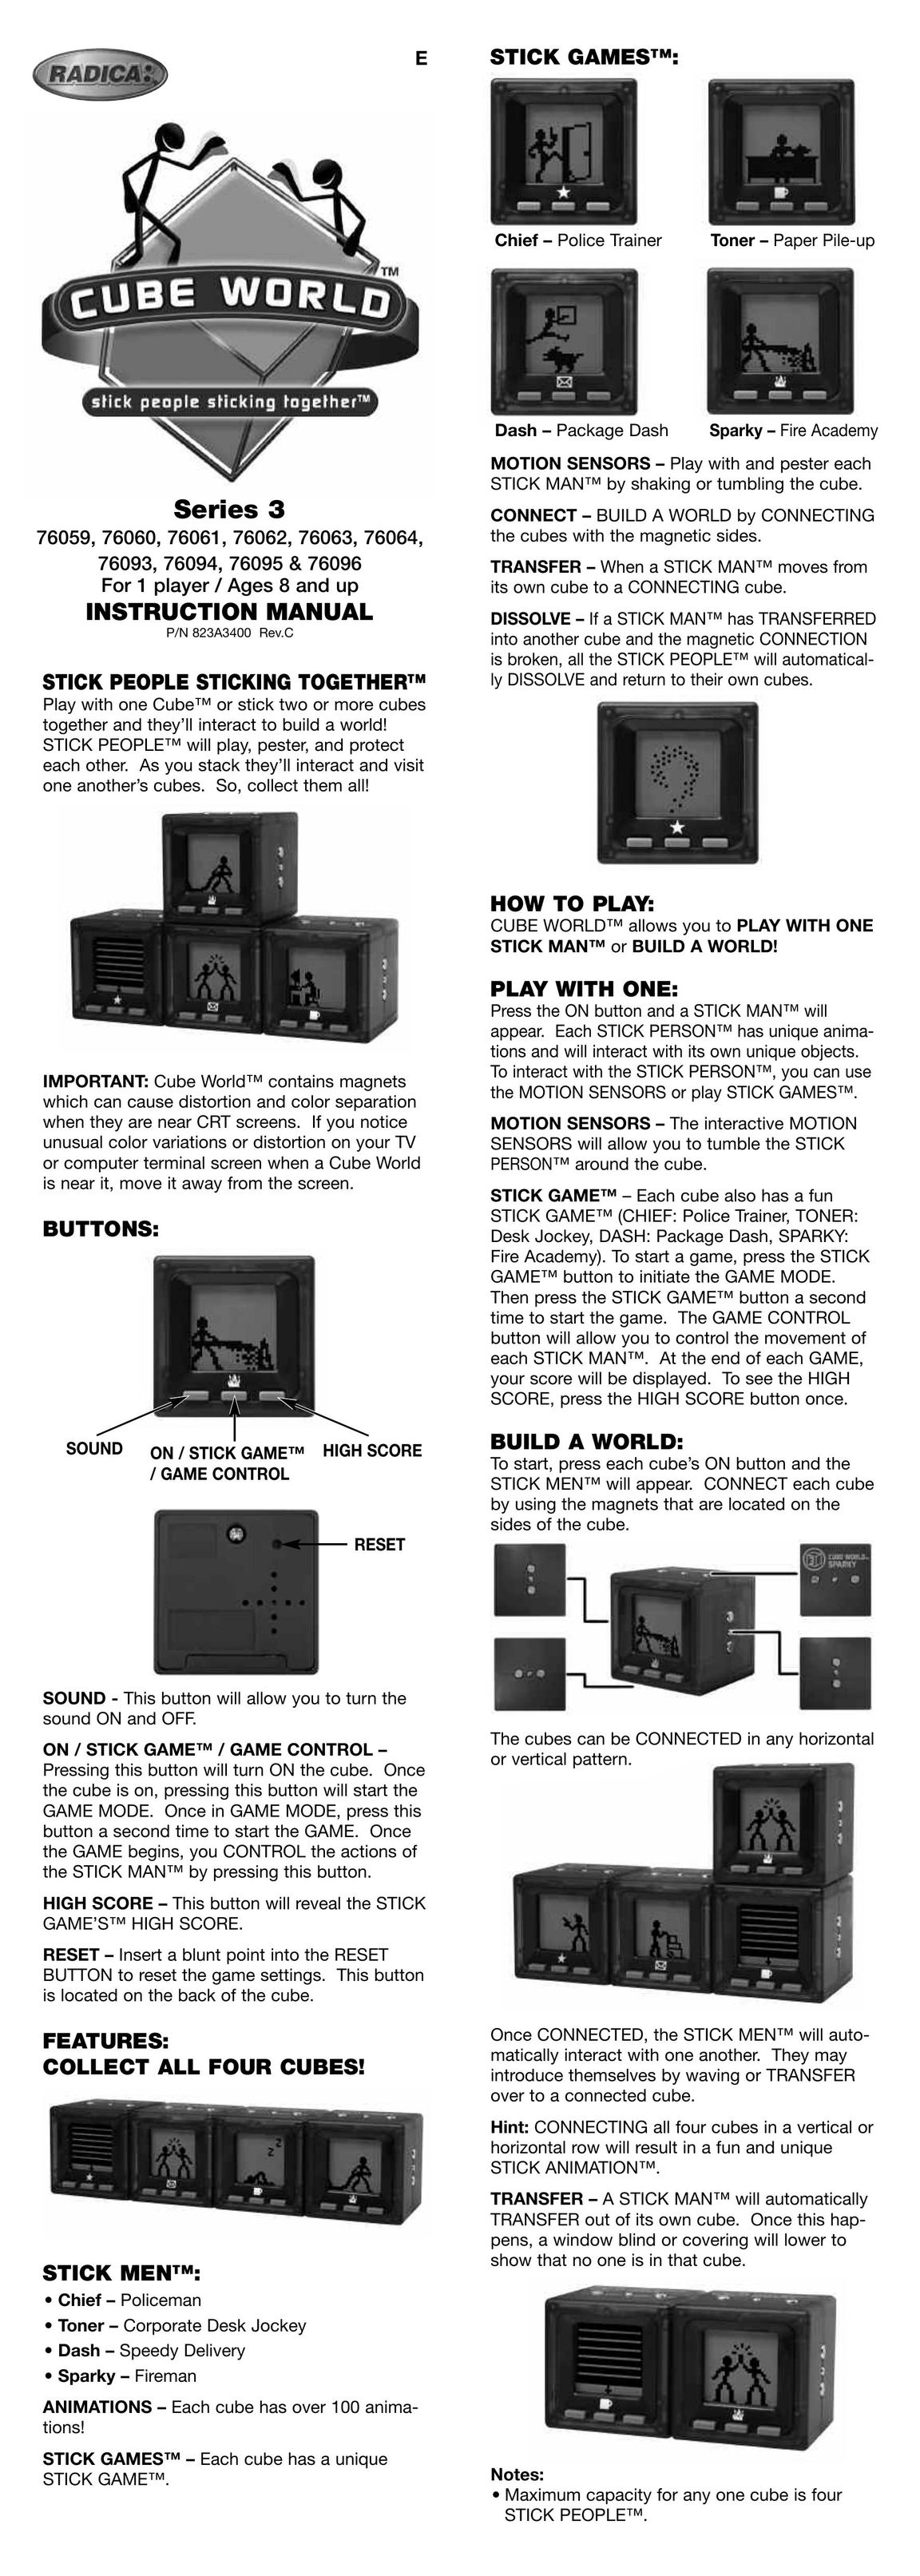 Radica Games 76061 Handheld Game System User Manual